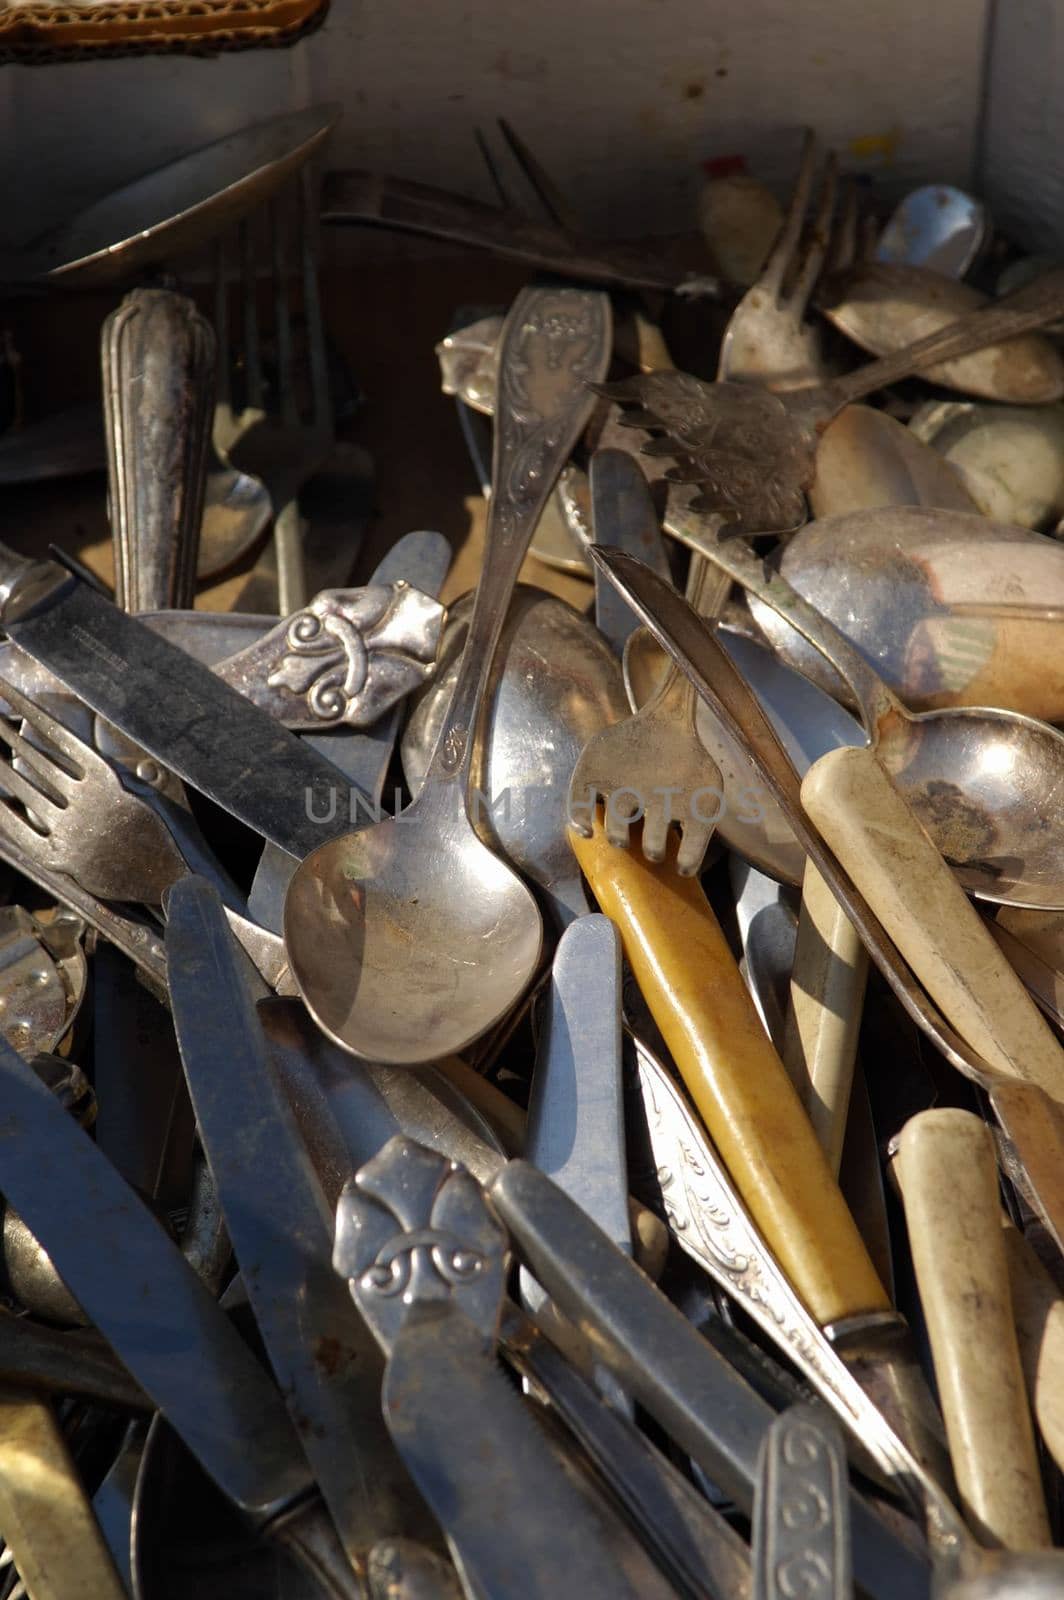 Old spoons, forks, knifes by javax